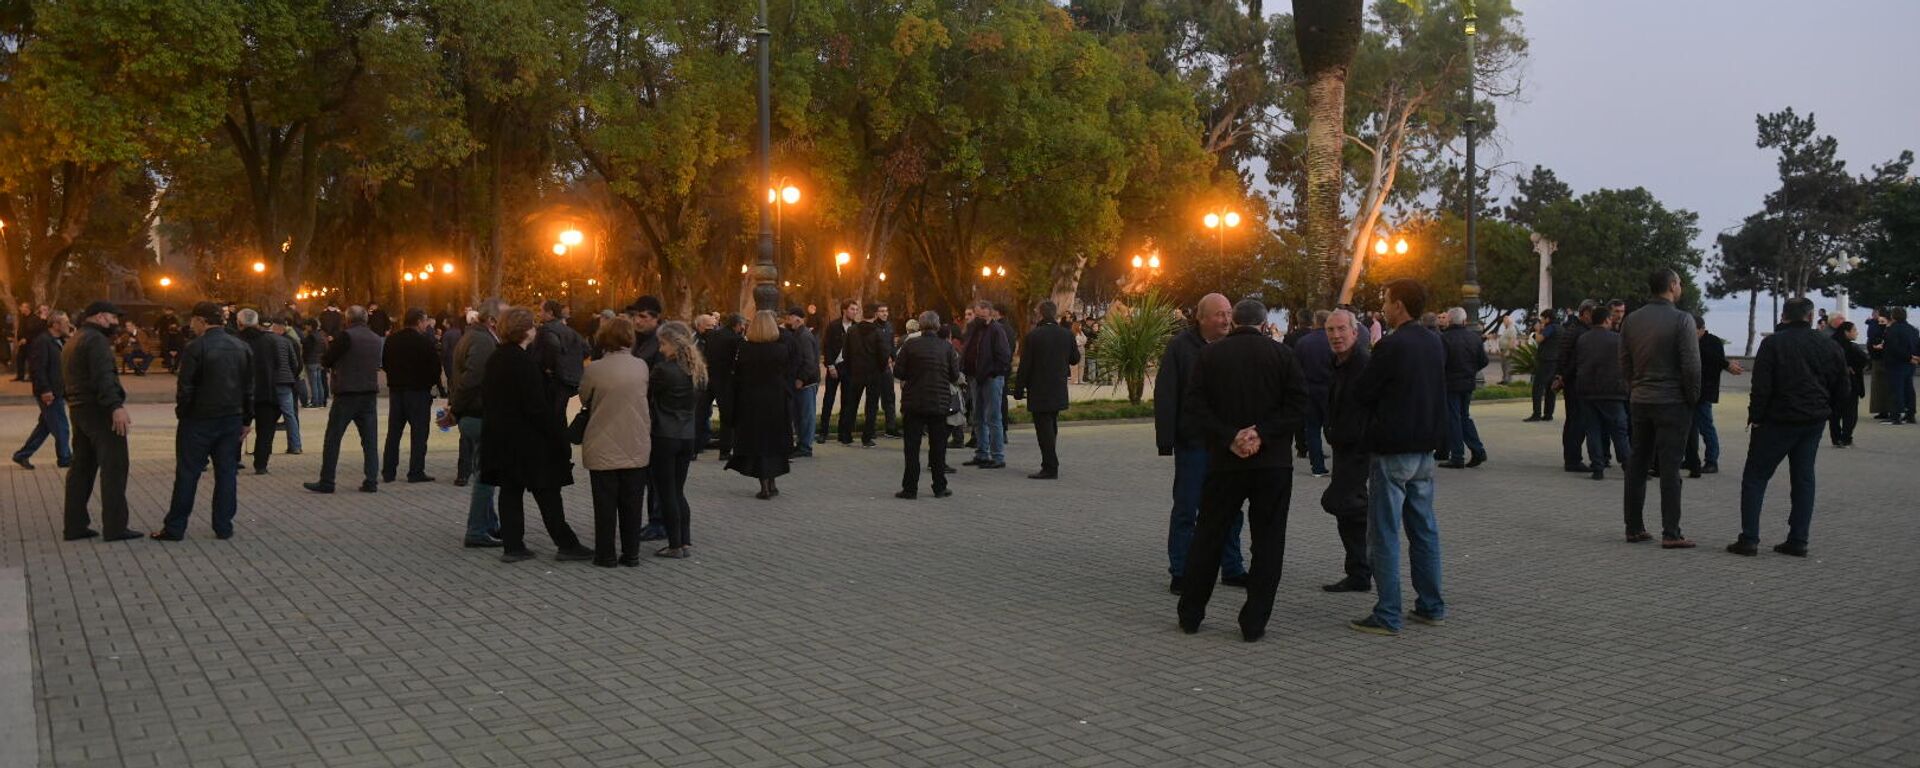 Акция протеста на площади у драмтеатра - Sputnik Абхазия, 1920, 04.11.2021